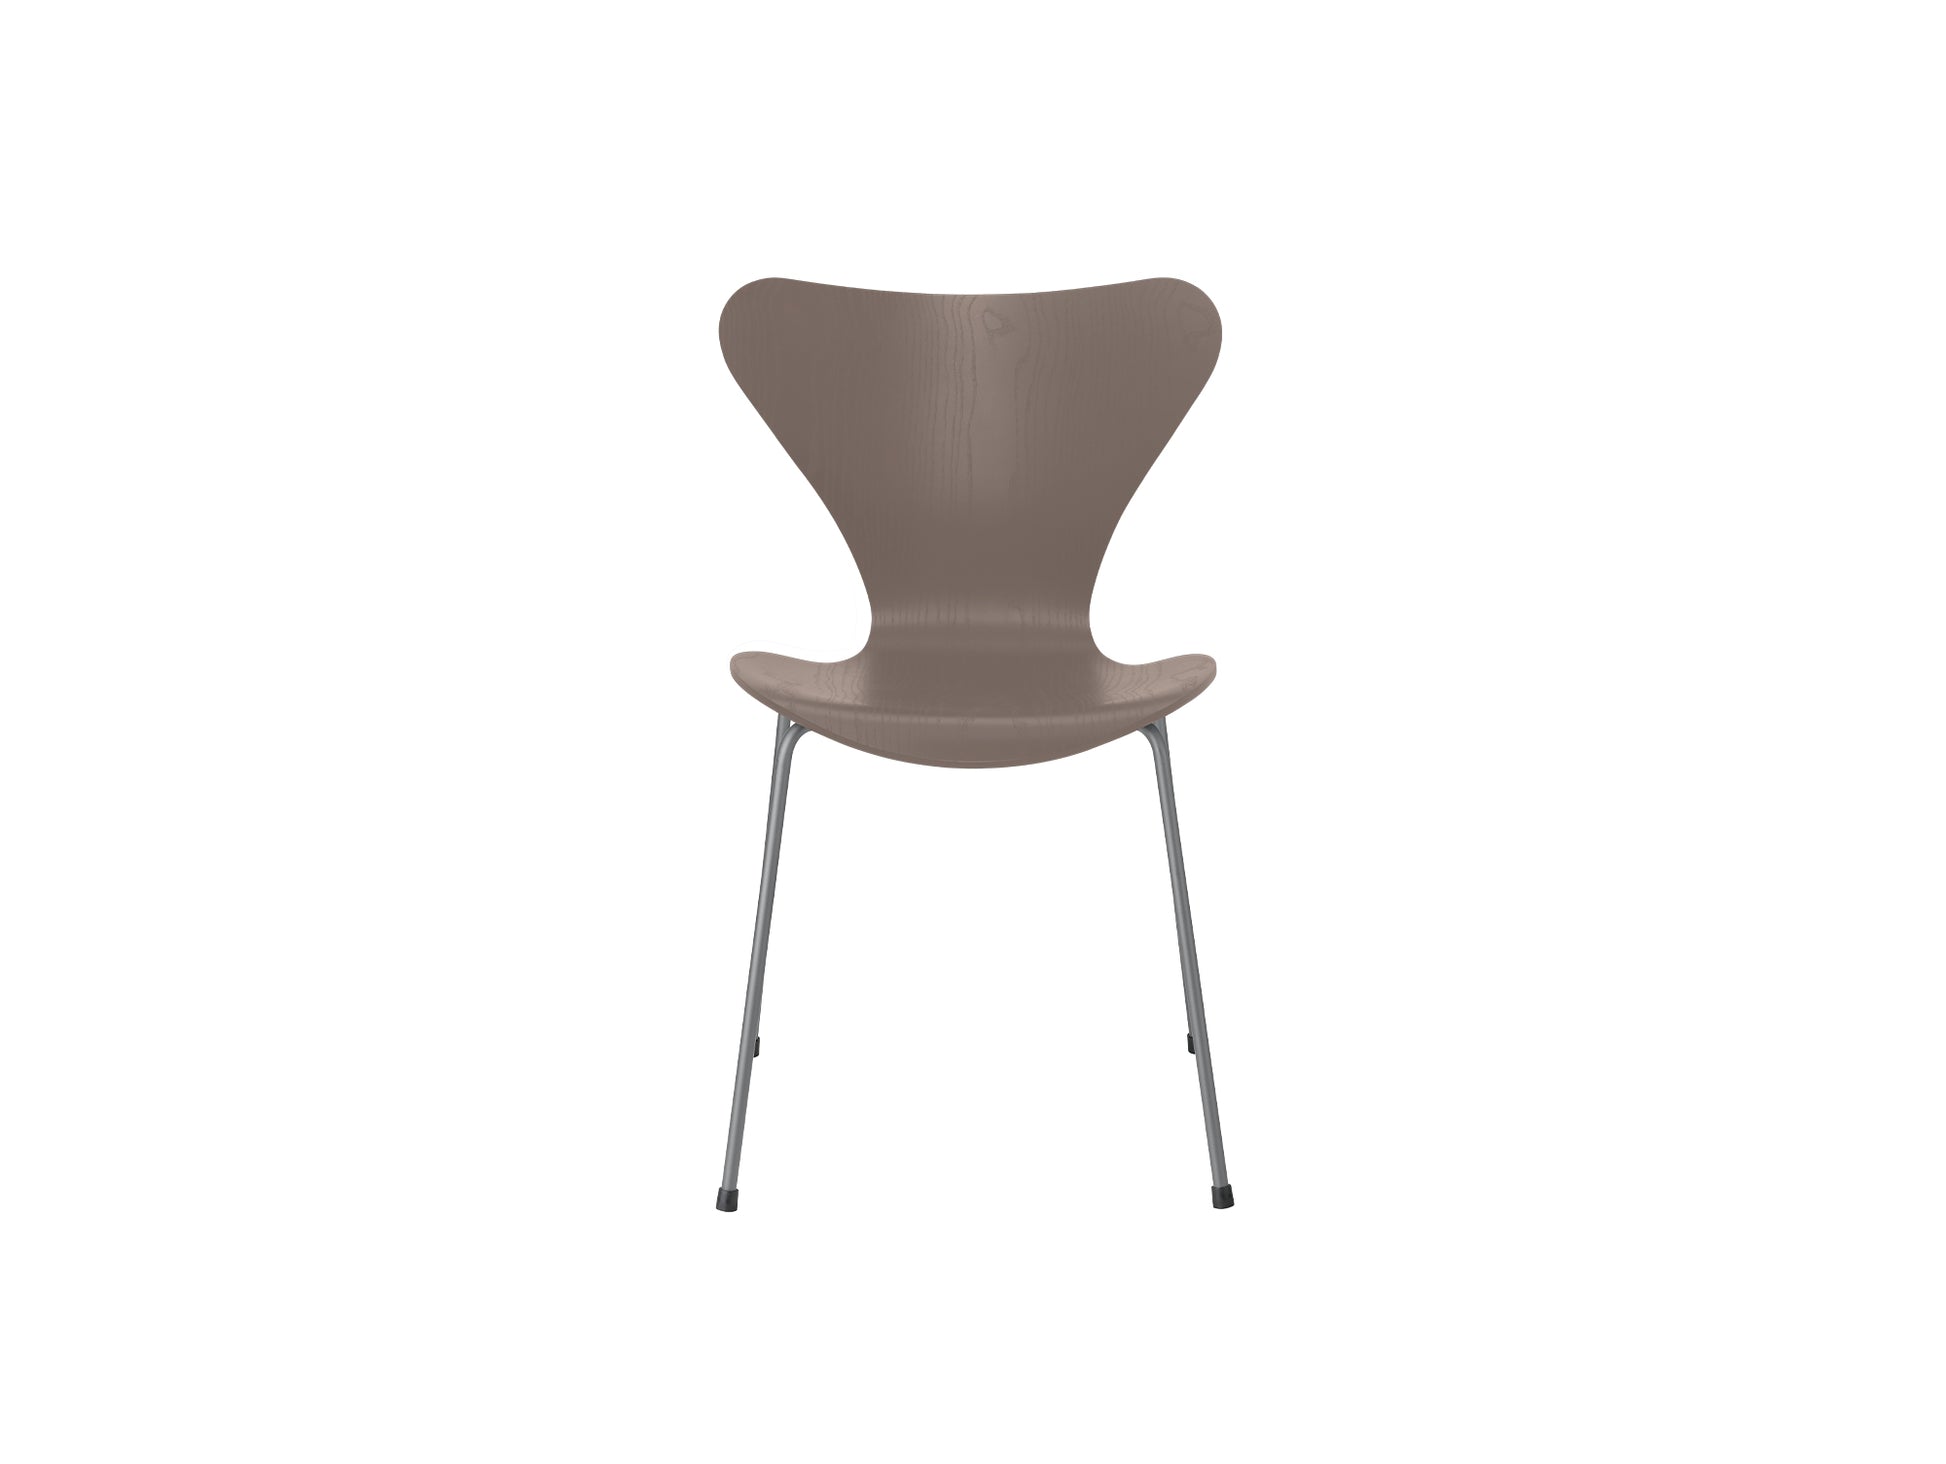 Series 7™ 3107 Dining Chair by Fritz Hansen - Deep Clay Coloured Ash Veneer Shell / Silver Grey Steel